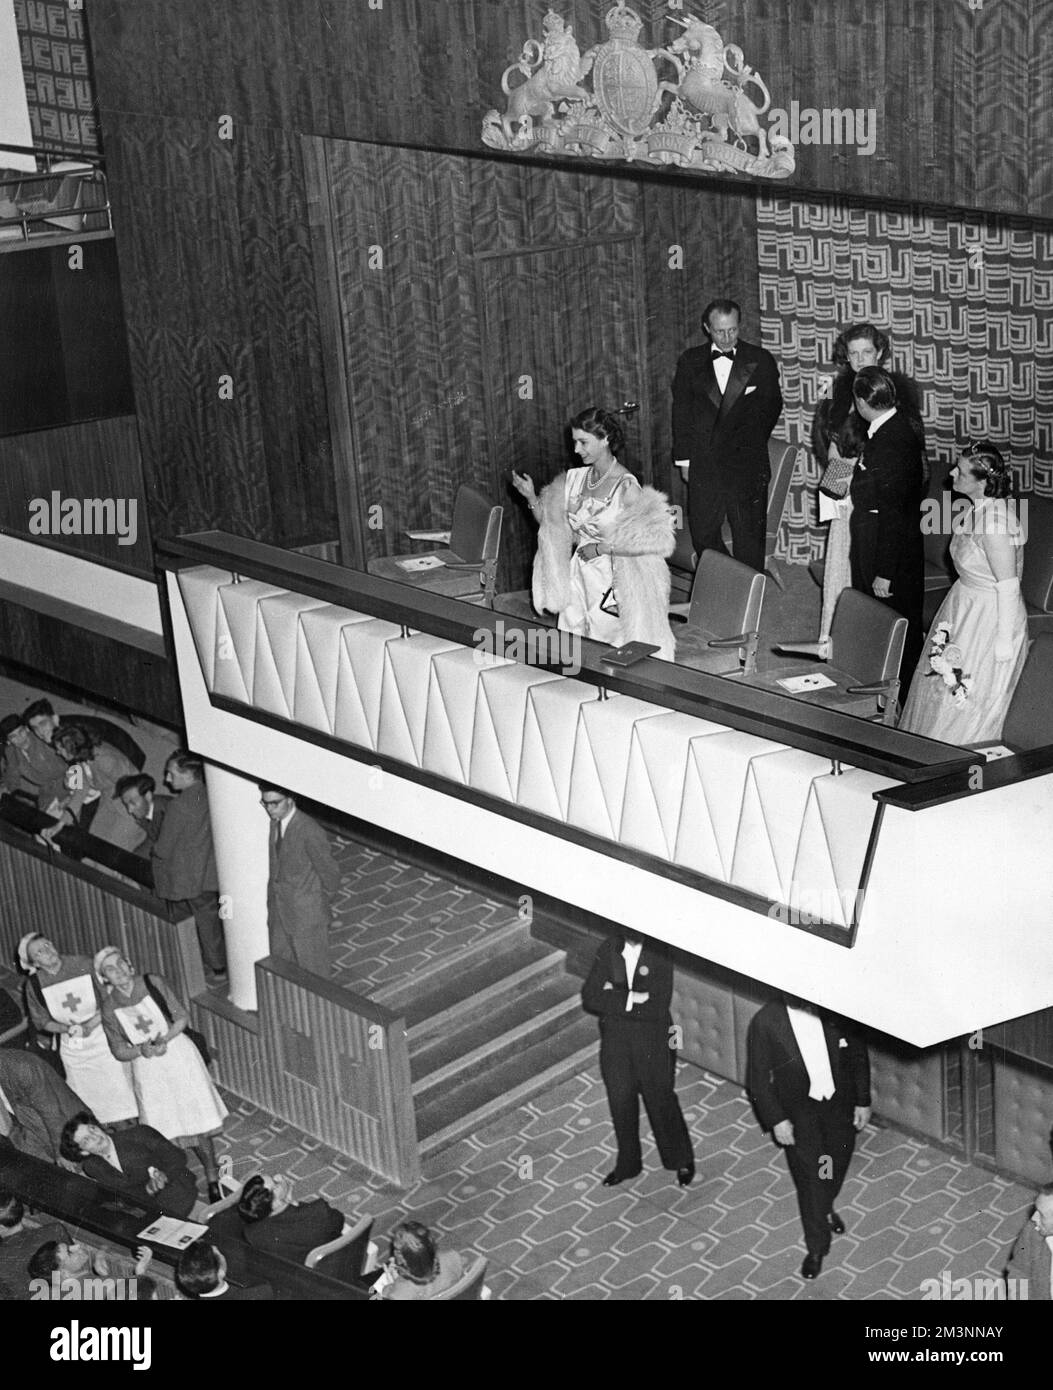 La principessa Elisabetta (Regina Elisabetta II) ha riconosciuto i saluti del pubblico quando ha partecipato al primo concerto della National Federation of Jazz Organisation al Royal Festival Hall, South Bank, Londra nel 1951. Foto Stock